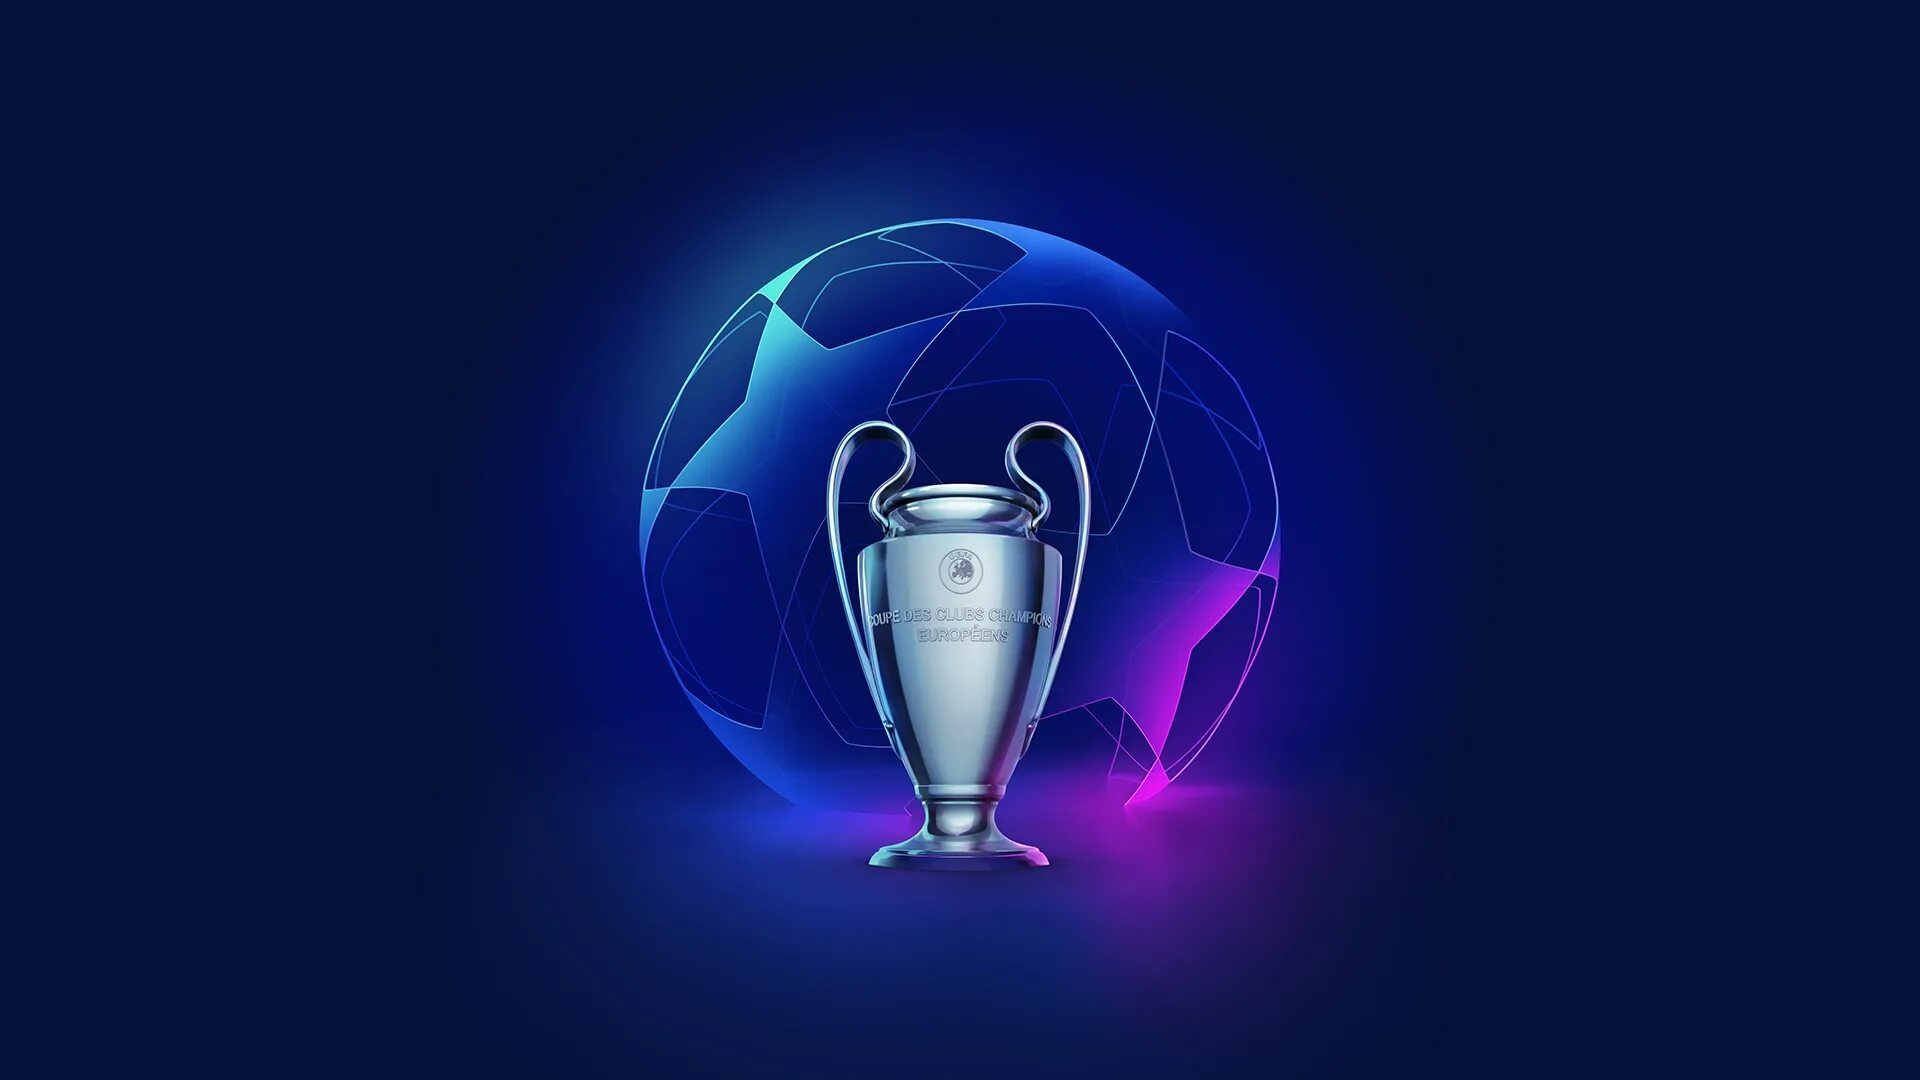 Футбол лч. UEFA Champions League 2021 2022. UEFA Champions League 2021. UEFA Champions League 2020. UEFA Champions League обои.